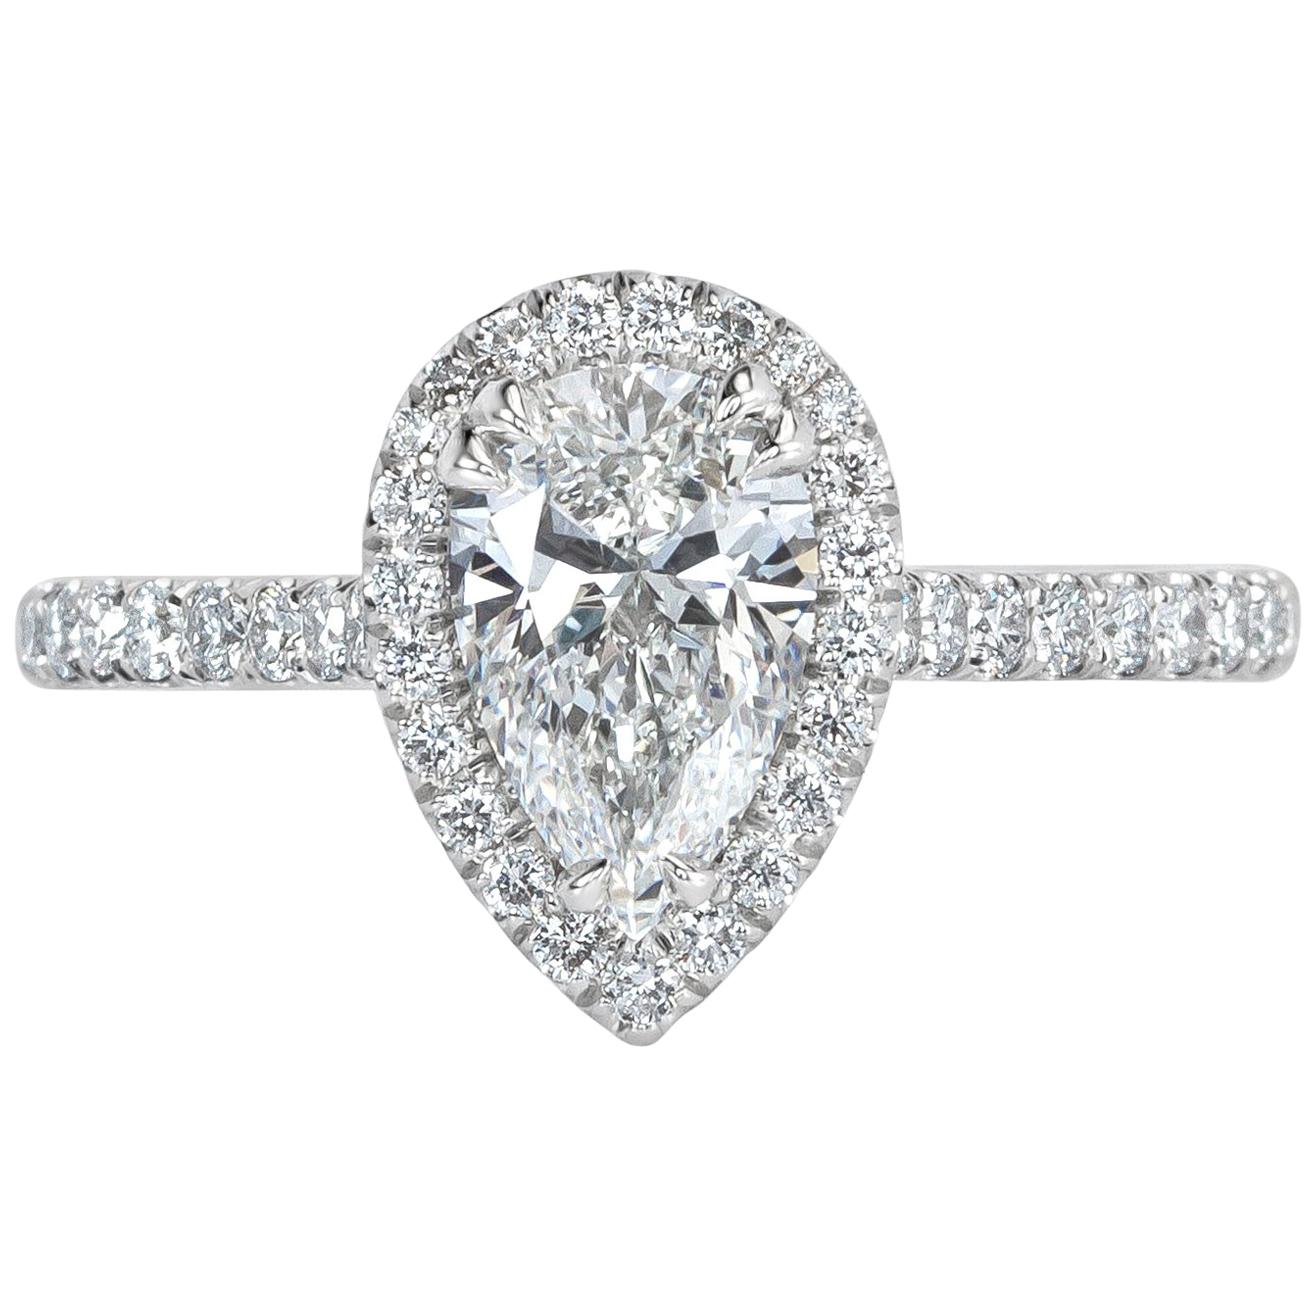 Mark Broumand  1.43 Carat Pear Shaped Diamond Engagement Ring